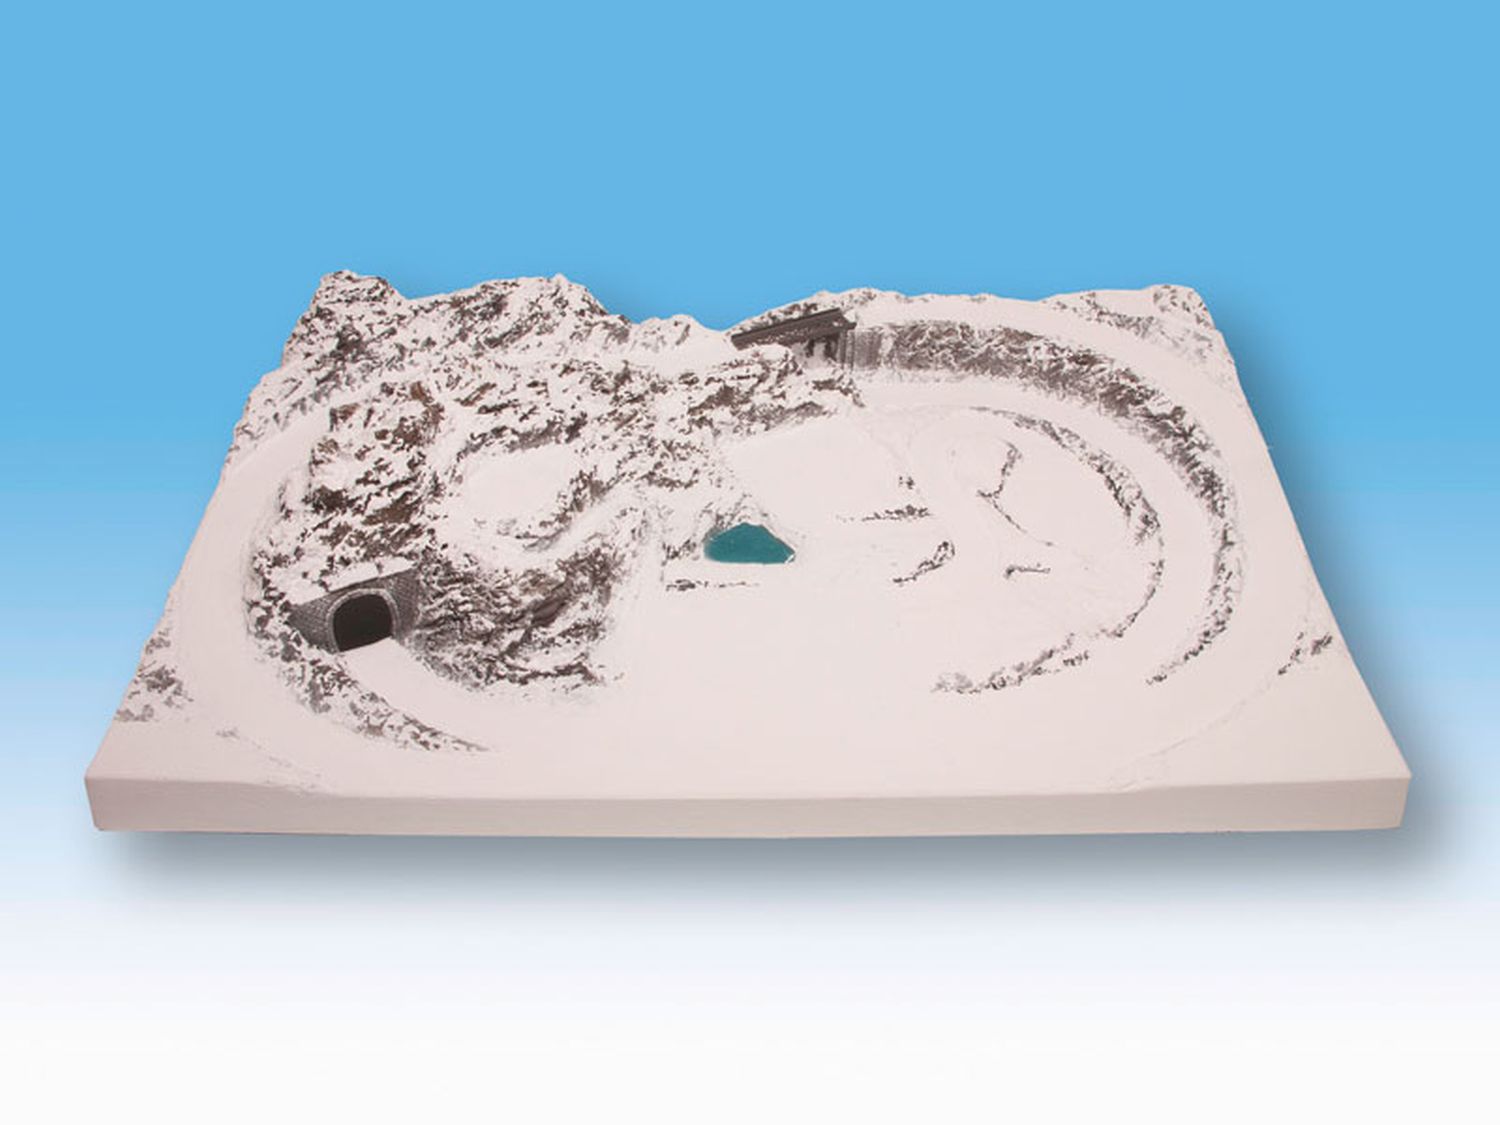 Miniatures : Noch 80120 - Extension de Plateau Drehscheibe 1:87, 100 x  140 cm